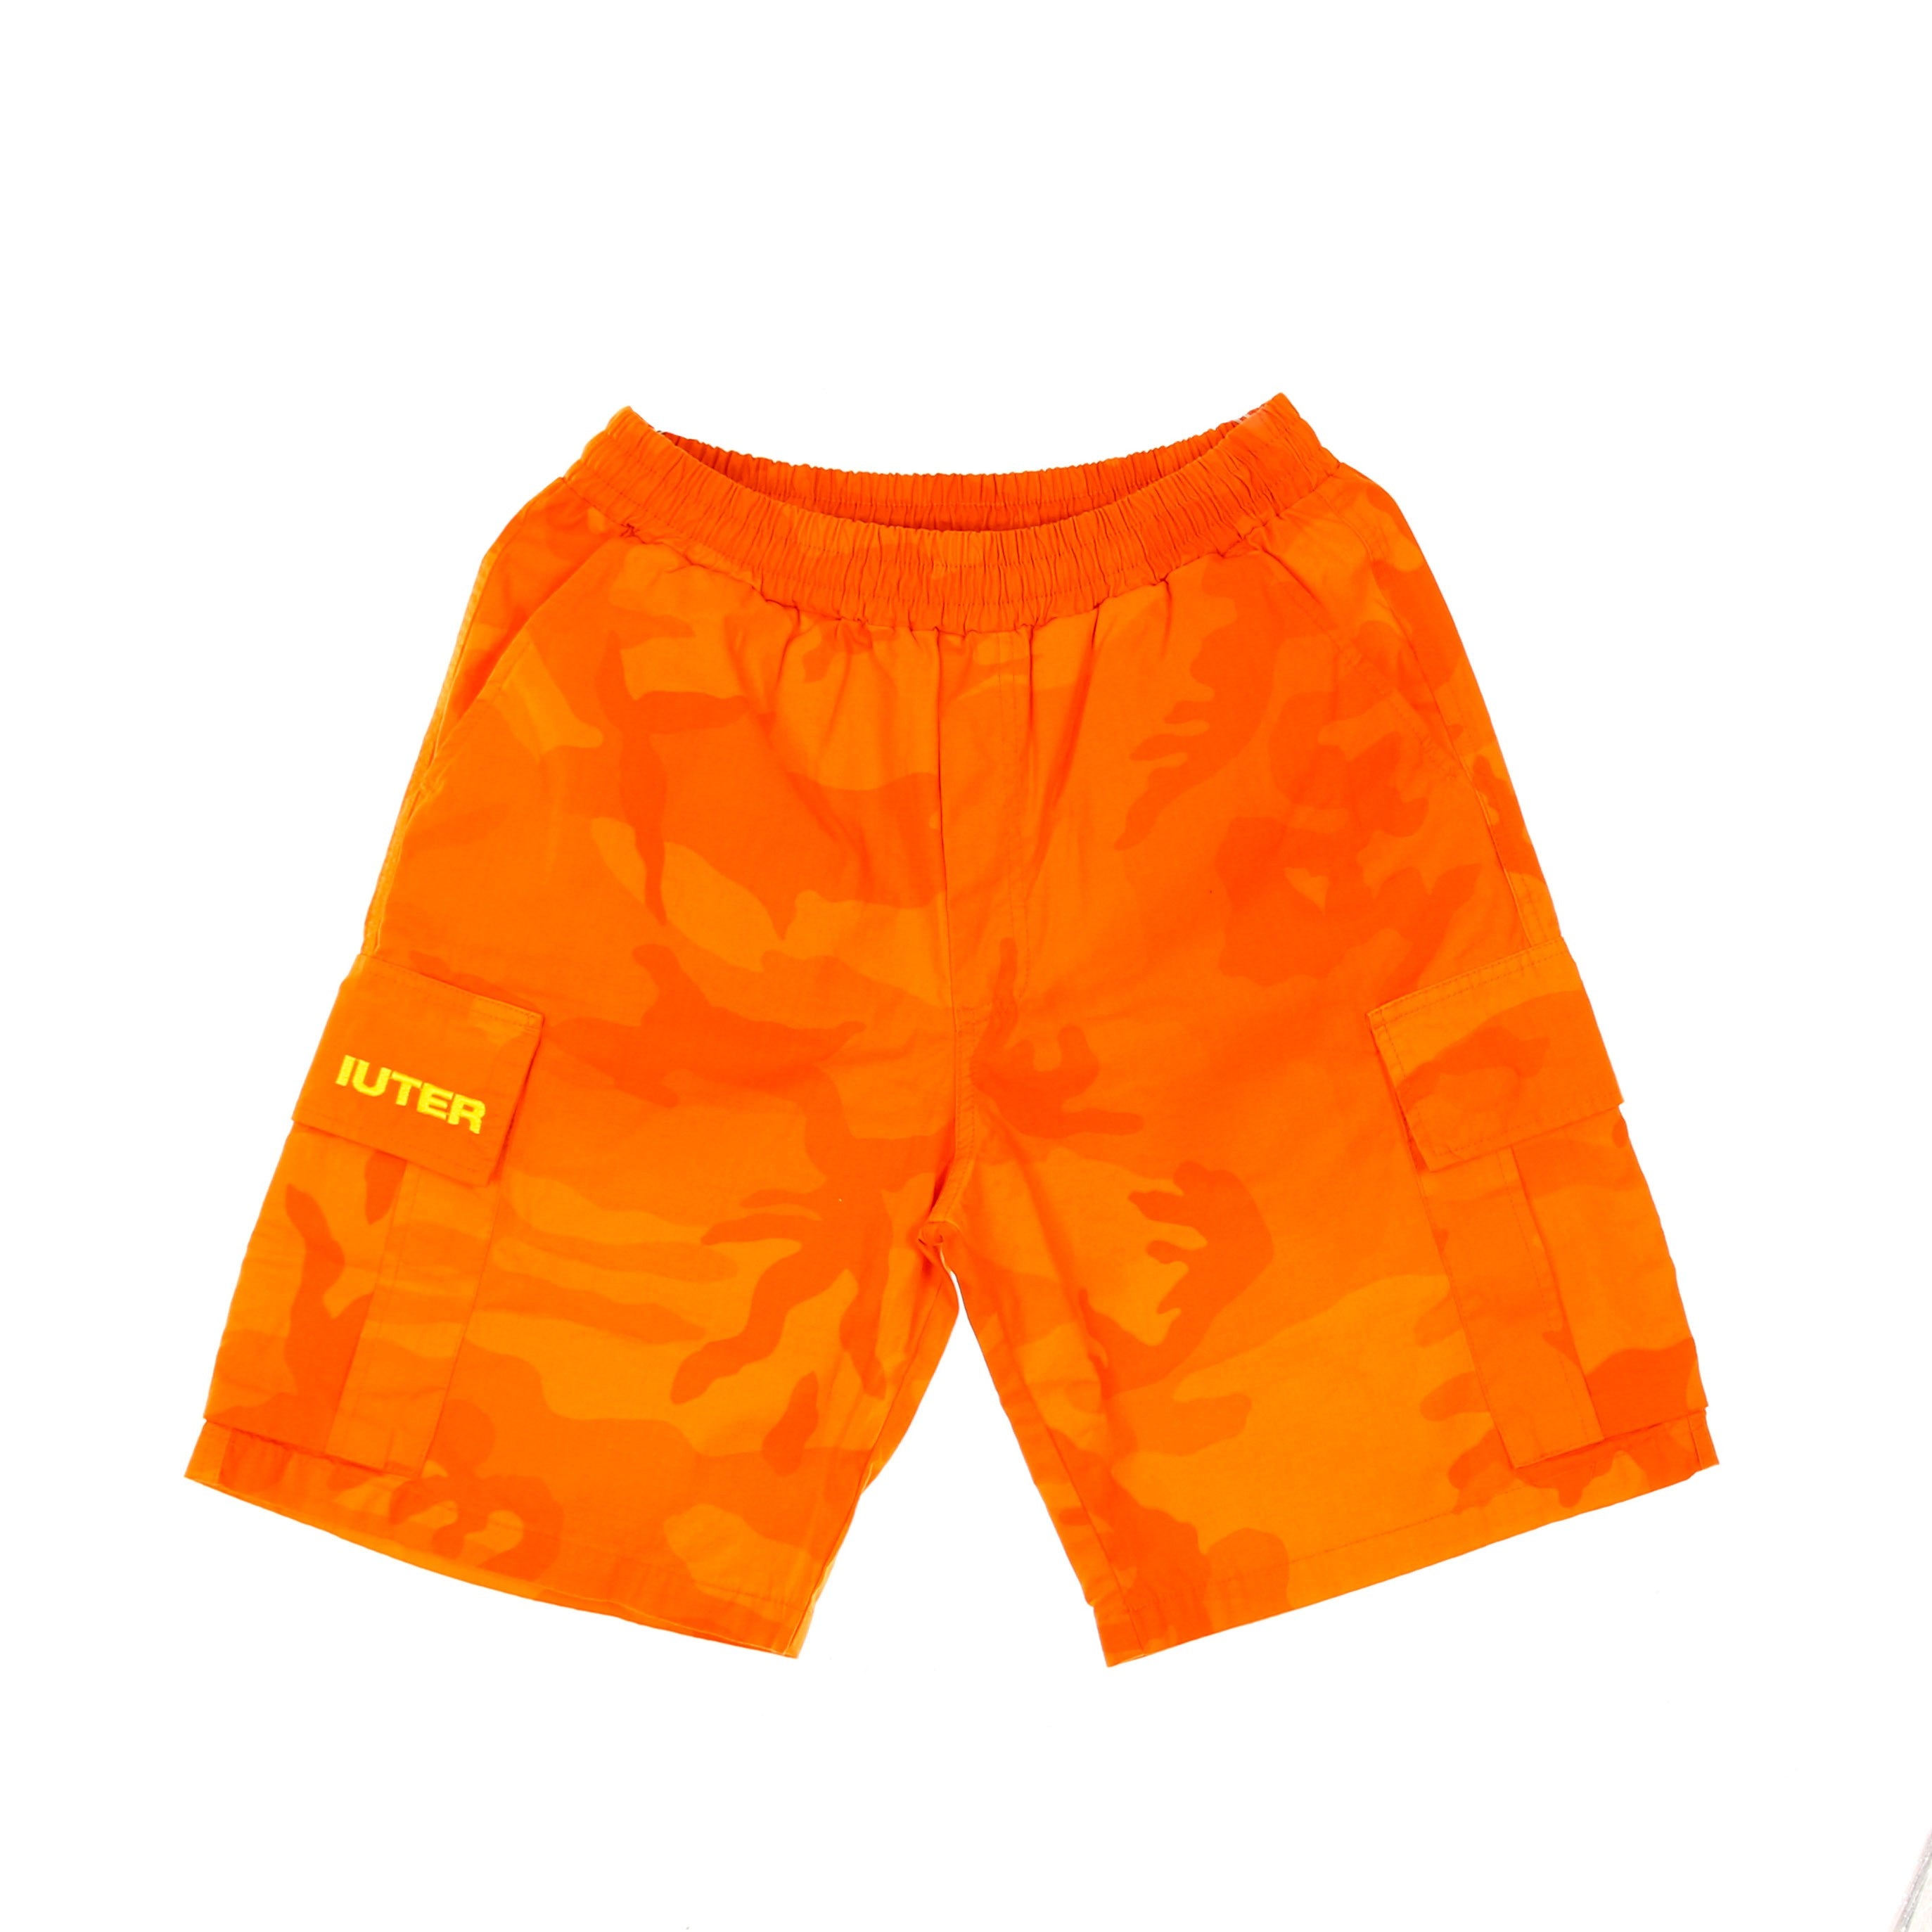 Iuter, Pantalone Corto Uomo Cargo Camo Short, Orange